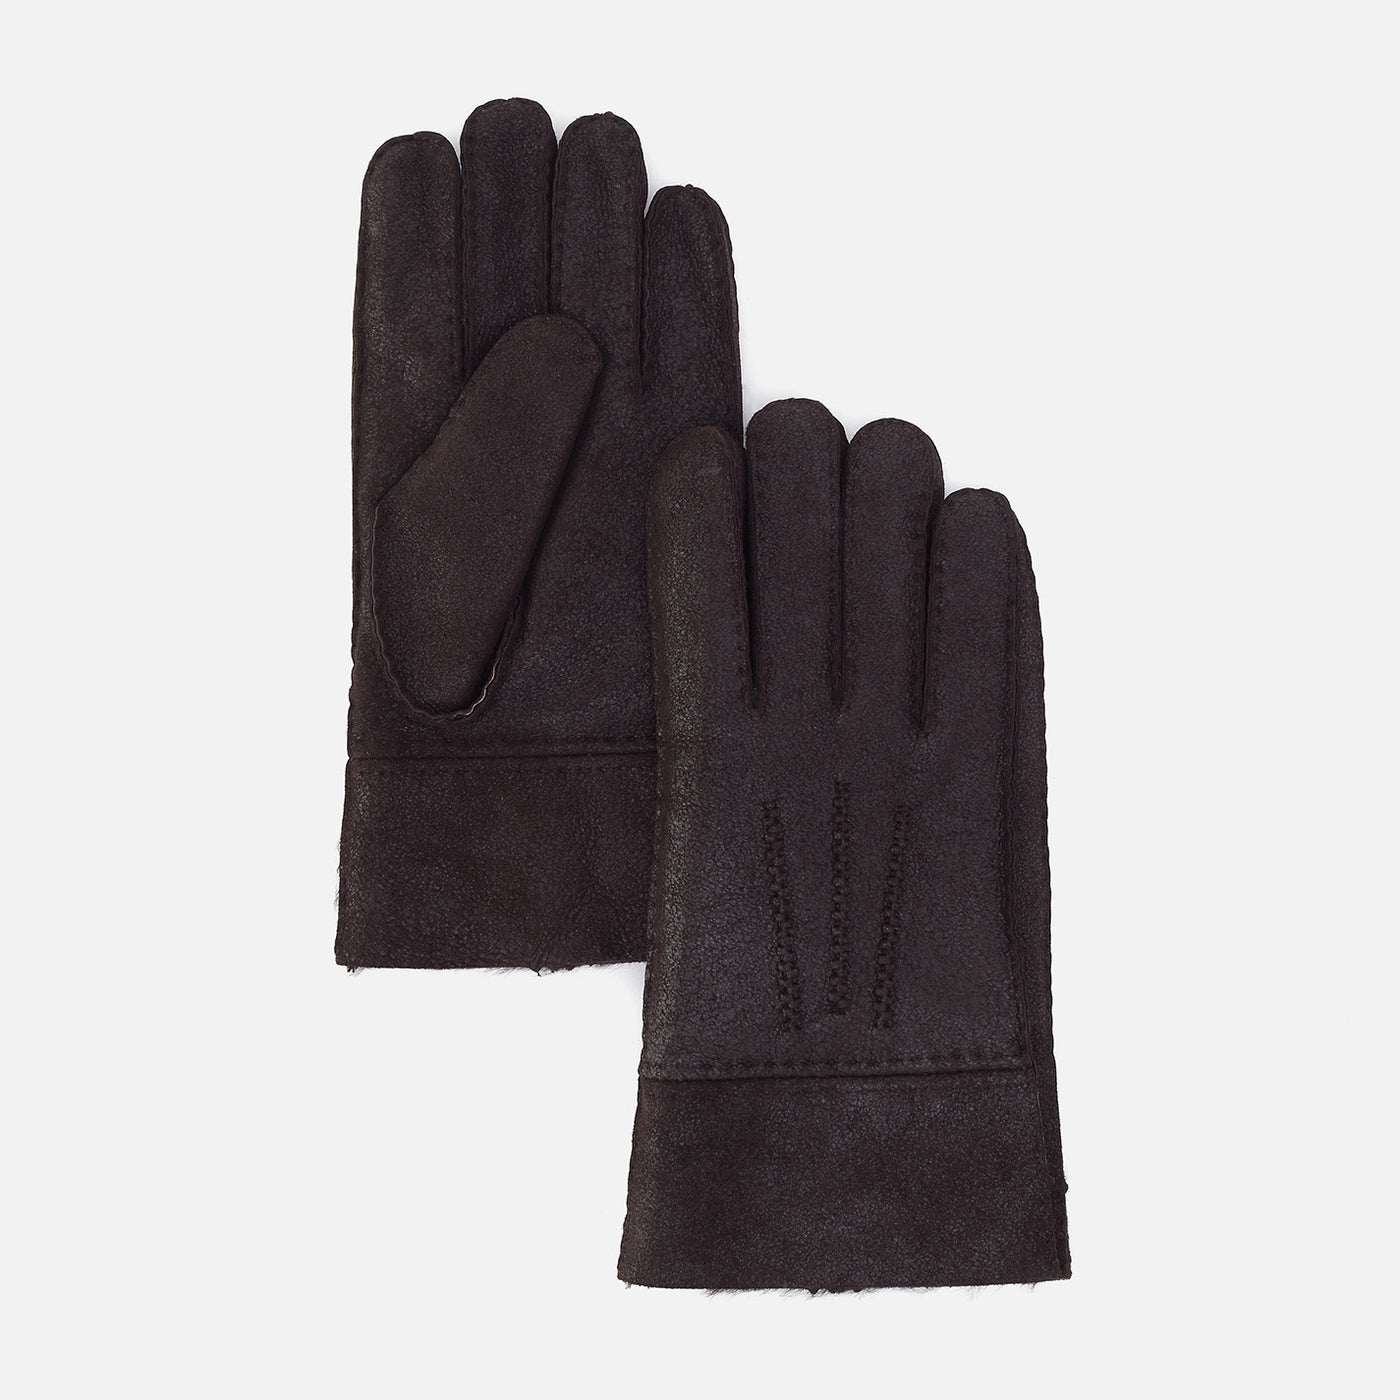 Rugged Black Aviator Sheepskin Glove in Aston Leather - L